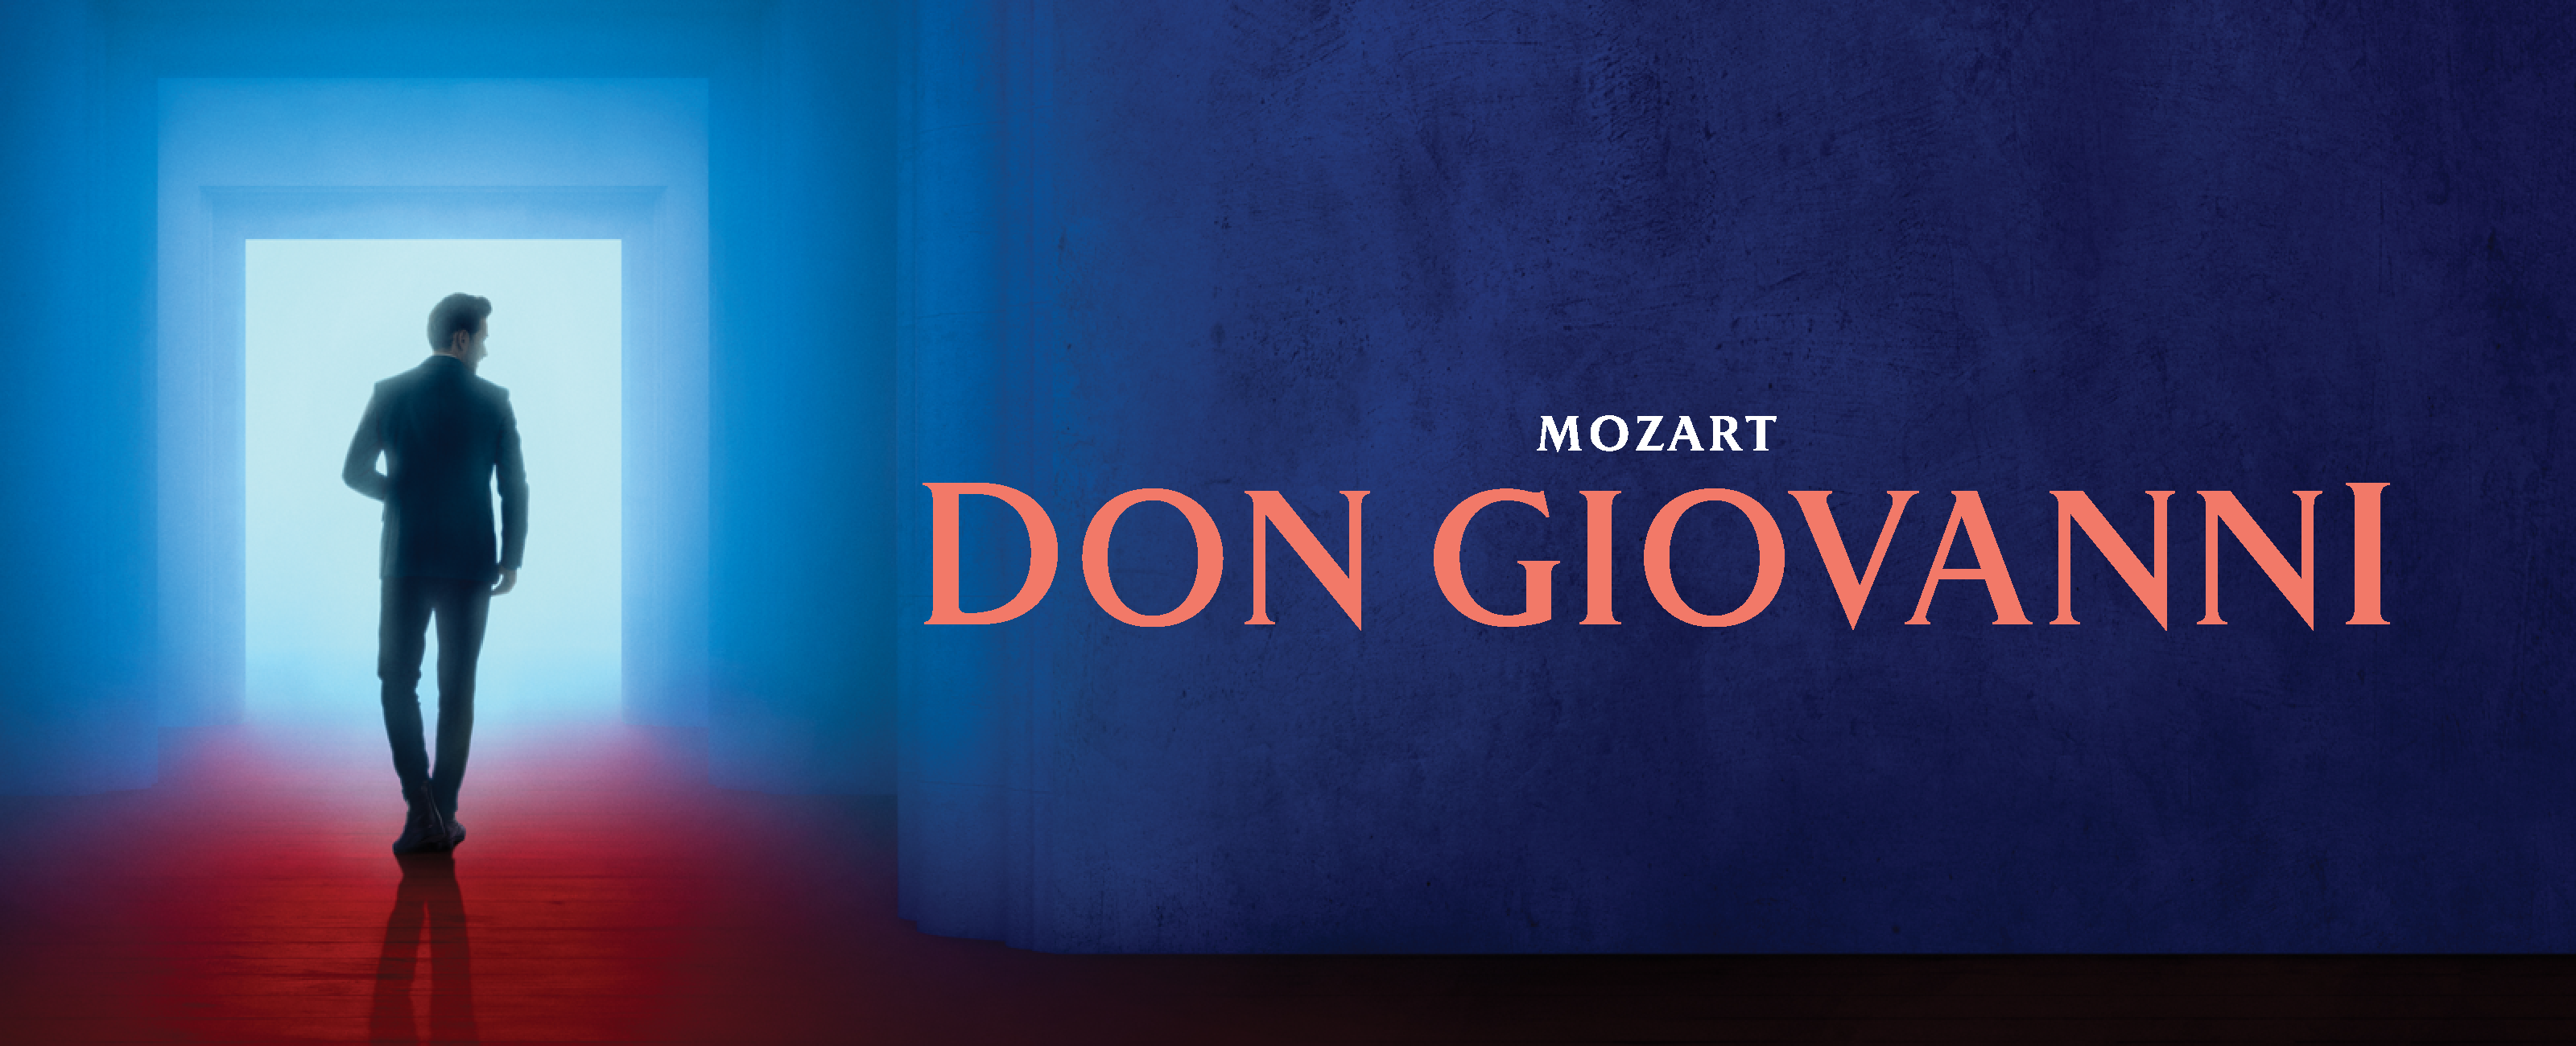 Don Giovanni banner 